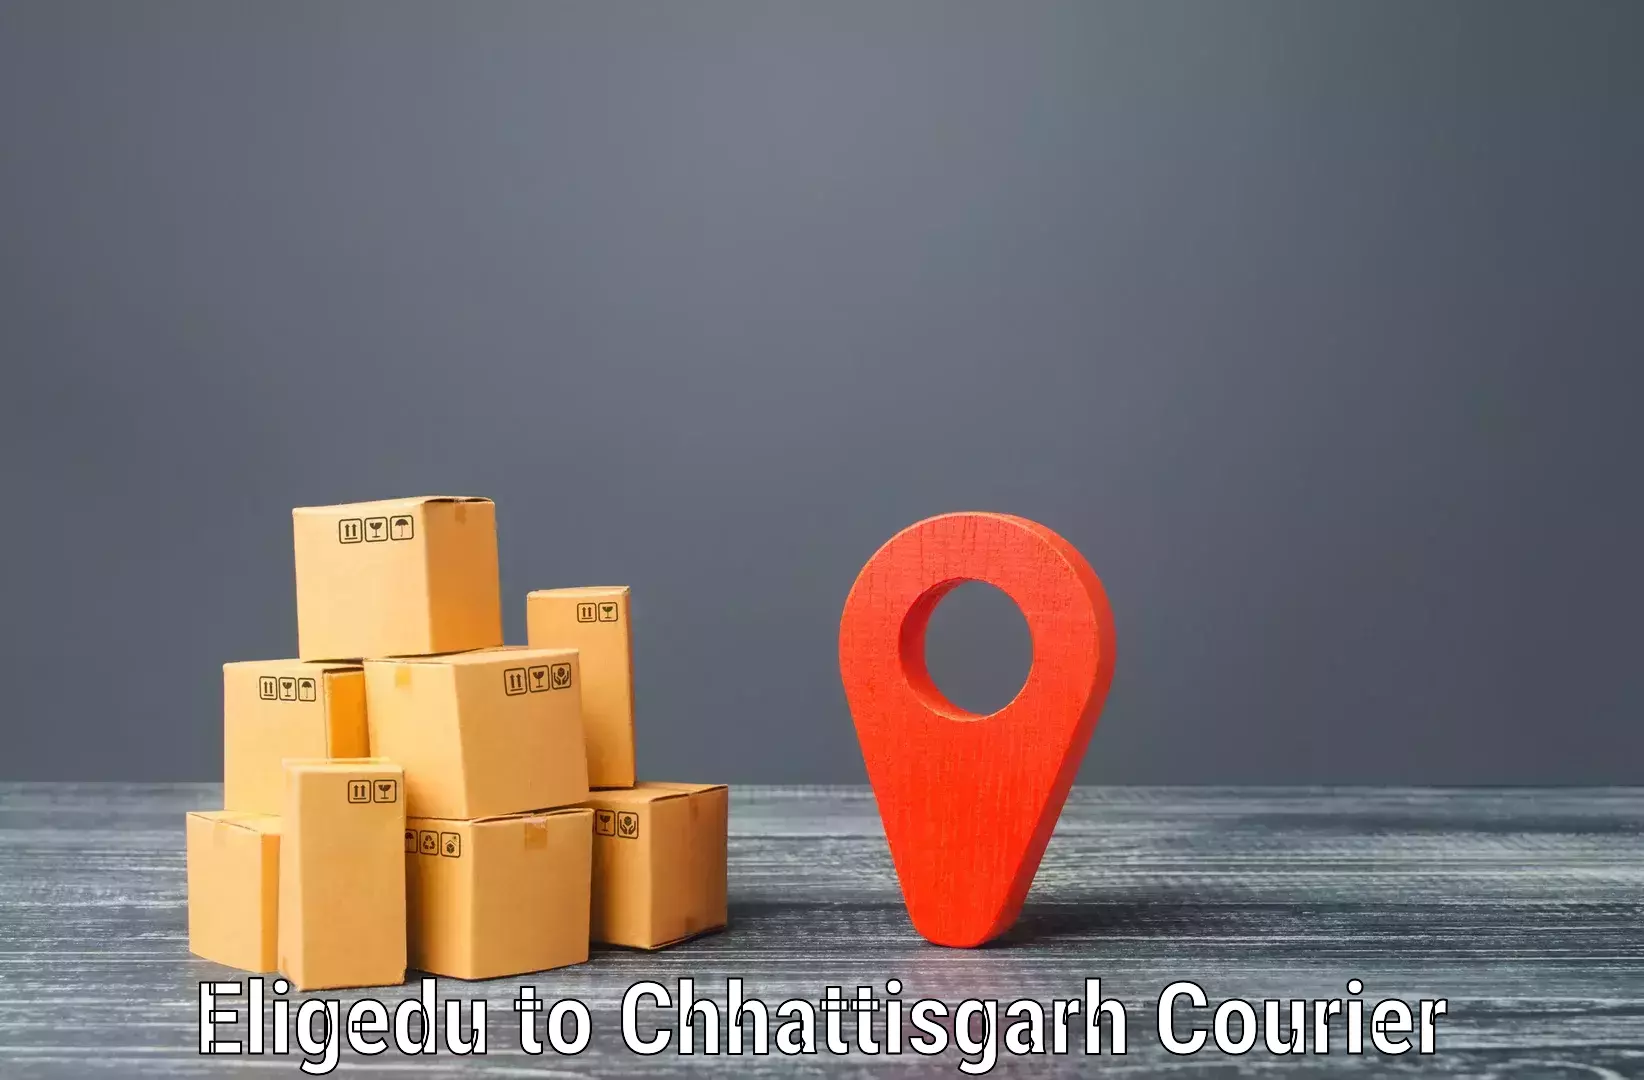 Air courier services Eligedu to Chhattisgarh